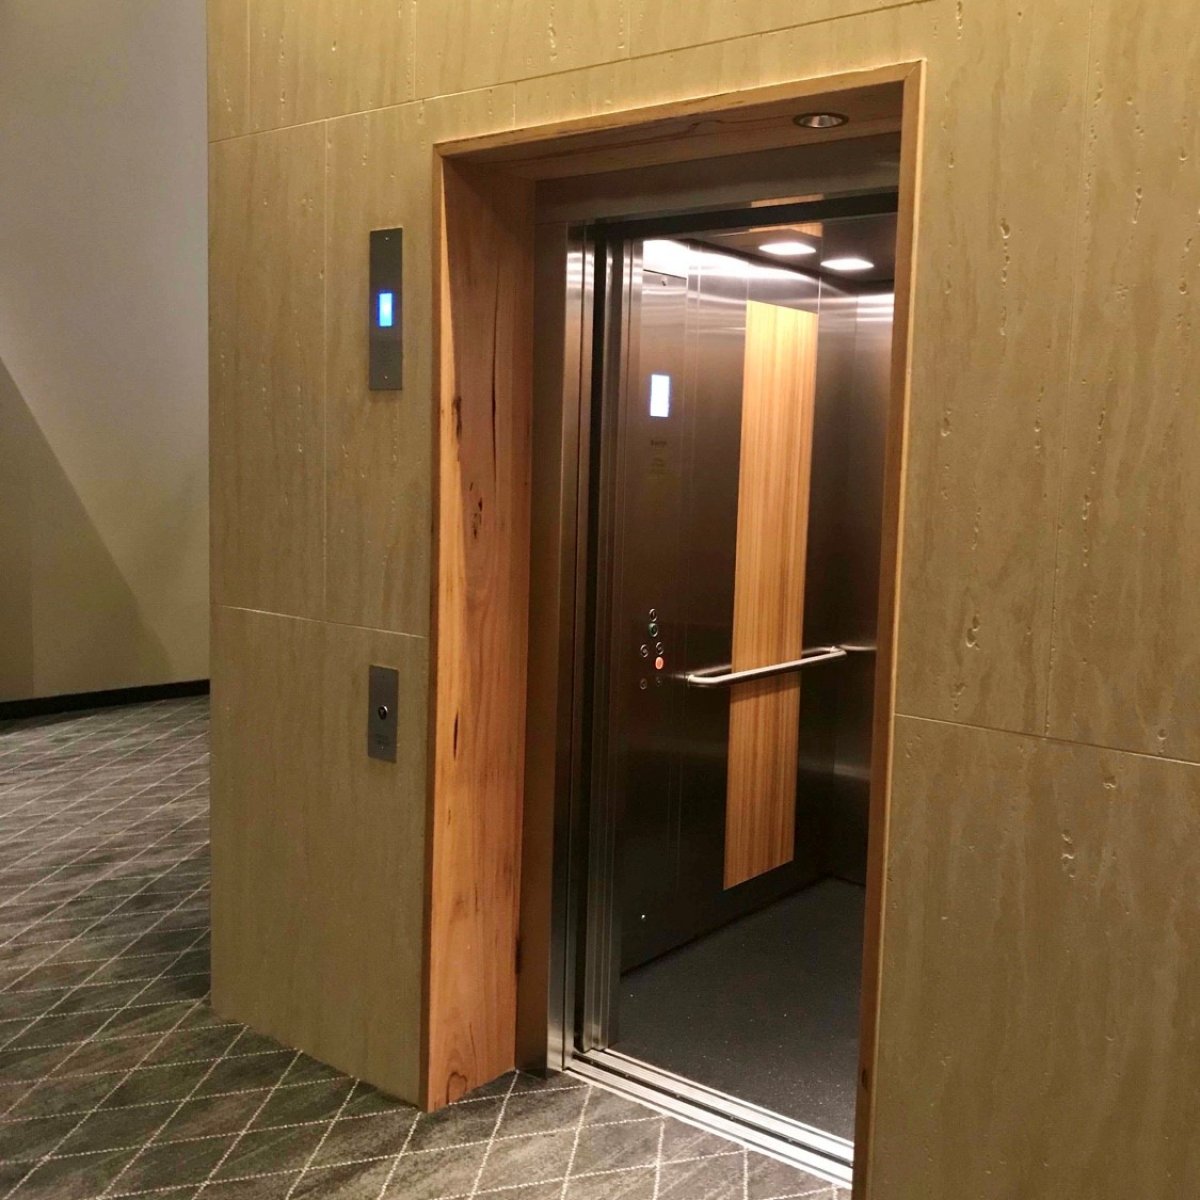  Modernisation | Simplex Elevators Gallery Image 1